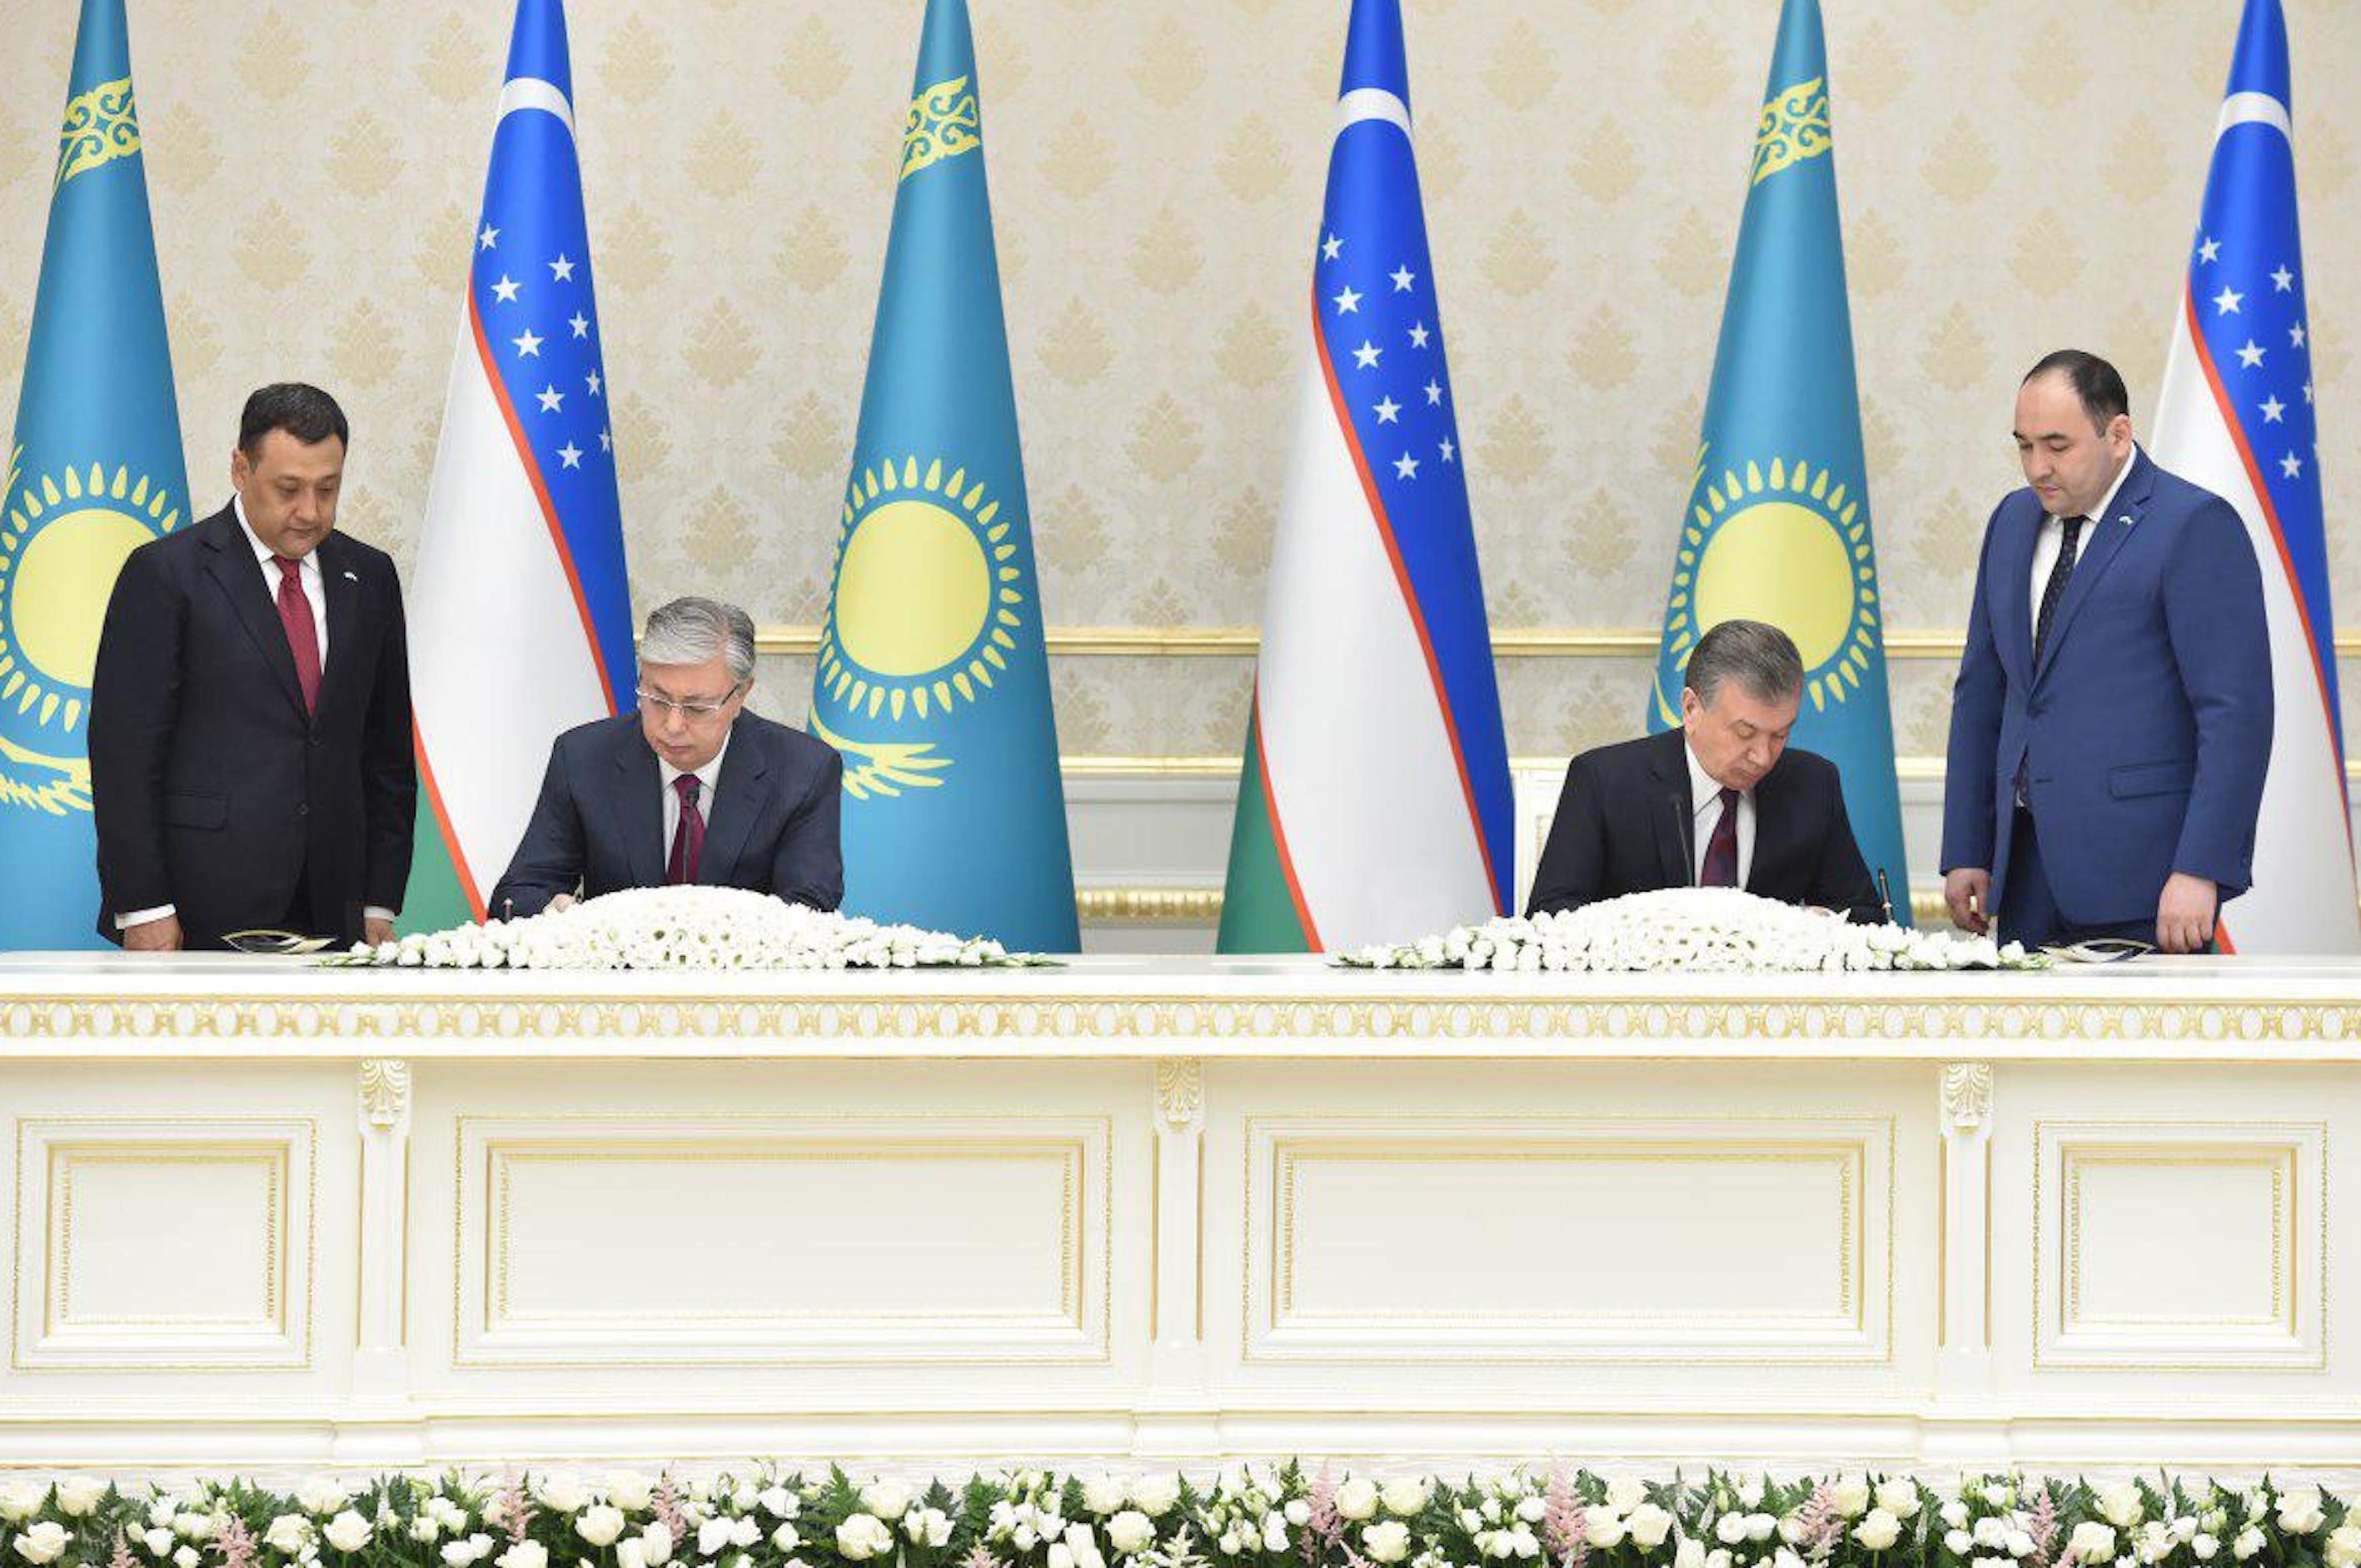 President Kassymjomar Tokayev of Kazakhstan and Uzbekistani President Shavkat Mirziyev sign a bilateral agreement in Tashkent on April 15, 2019. 